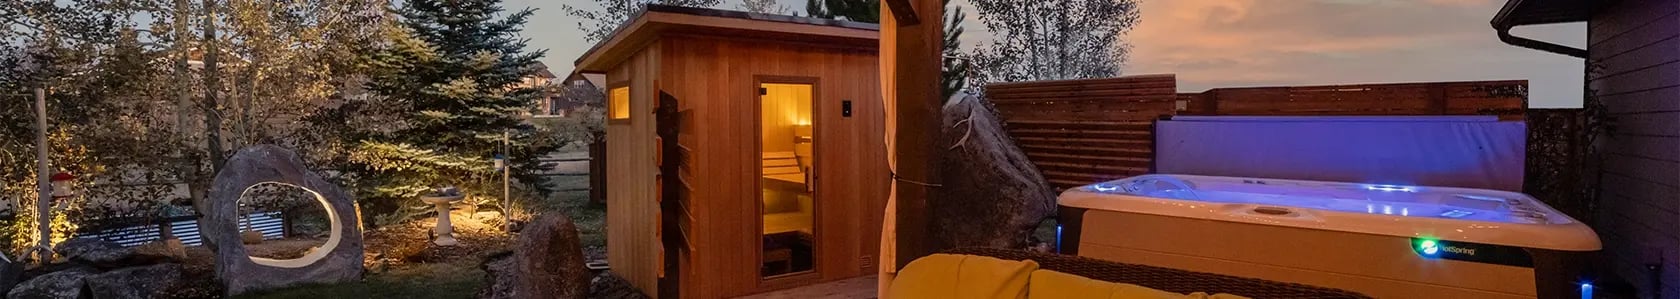 View Euro outdoor sauna options